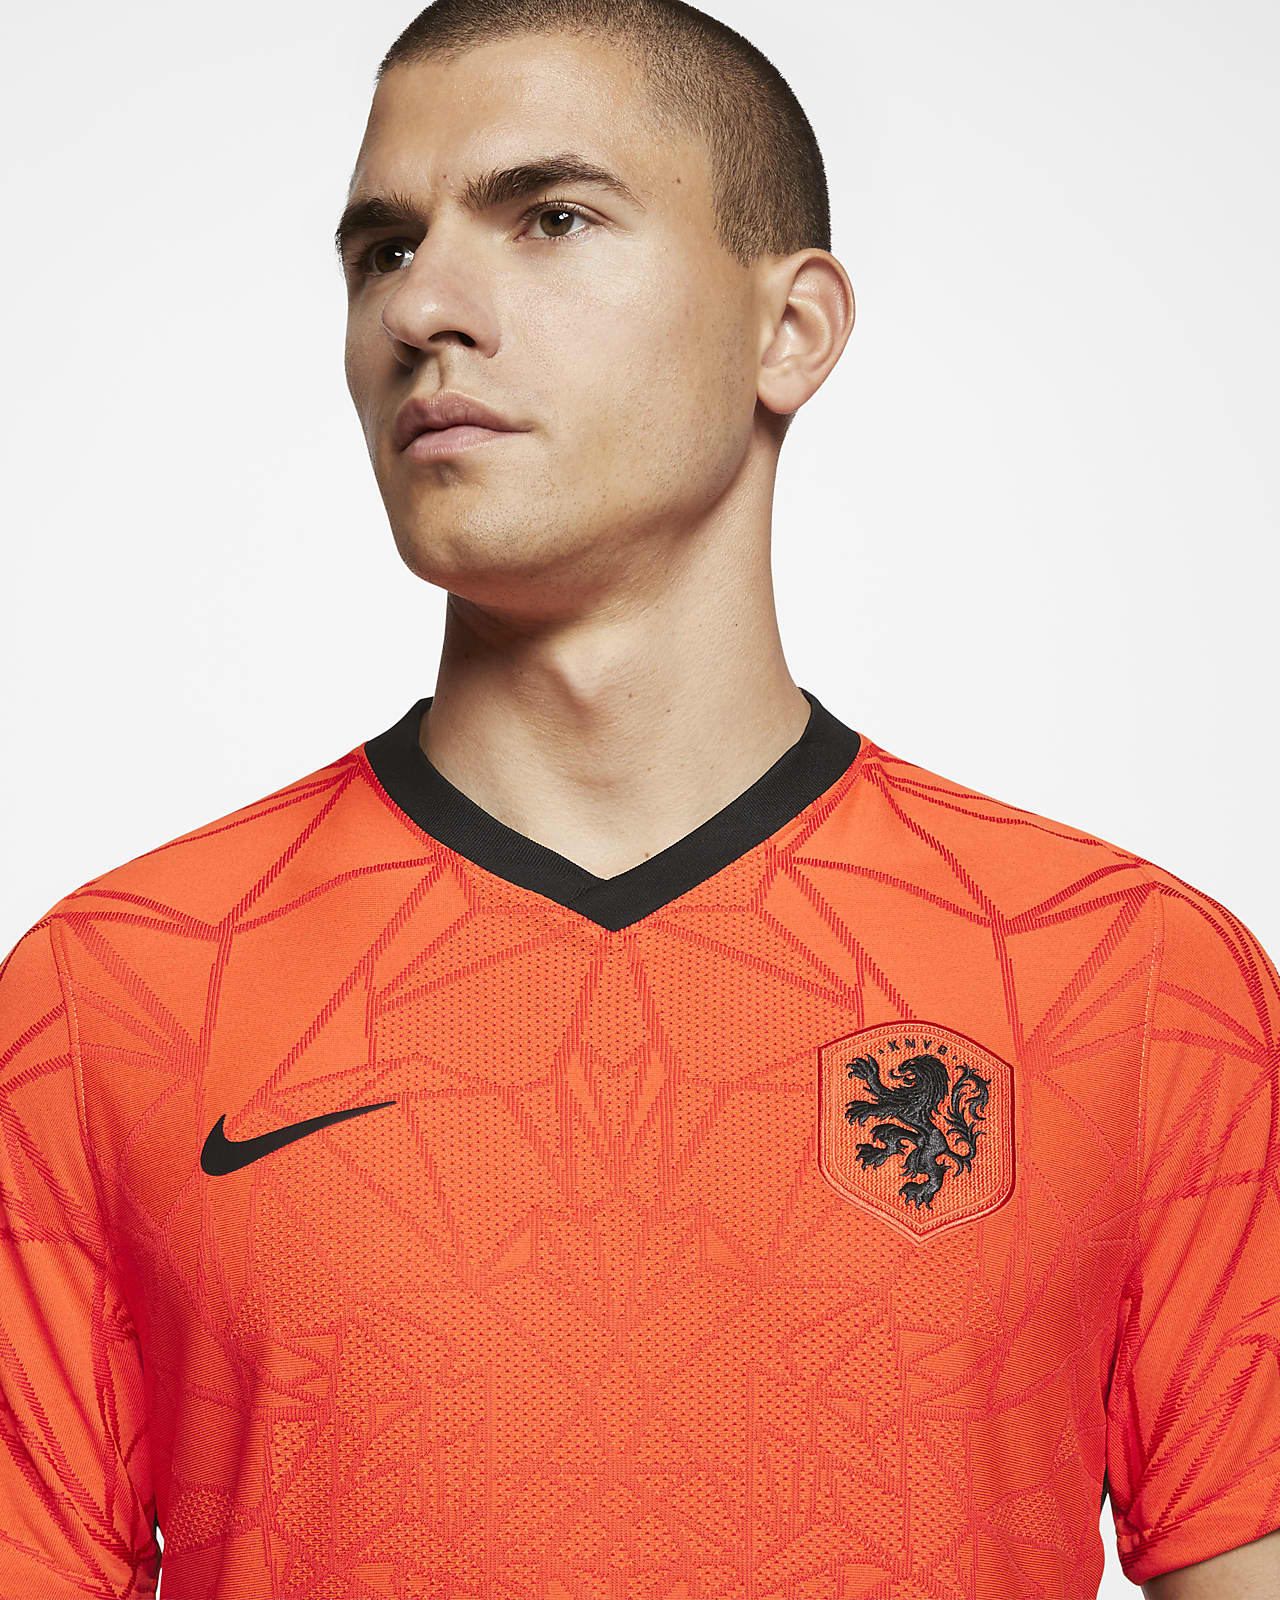 Netherlands 2020 Nike Home Kit | 20/21 Kits | Football shirt blog